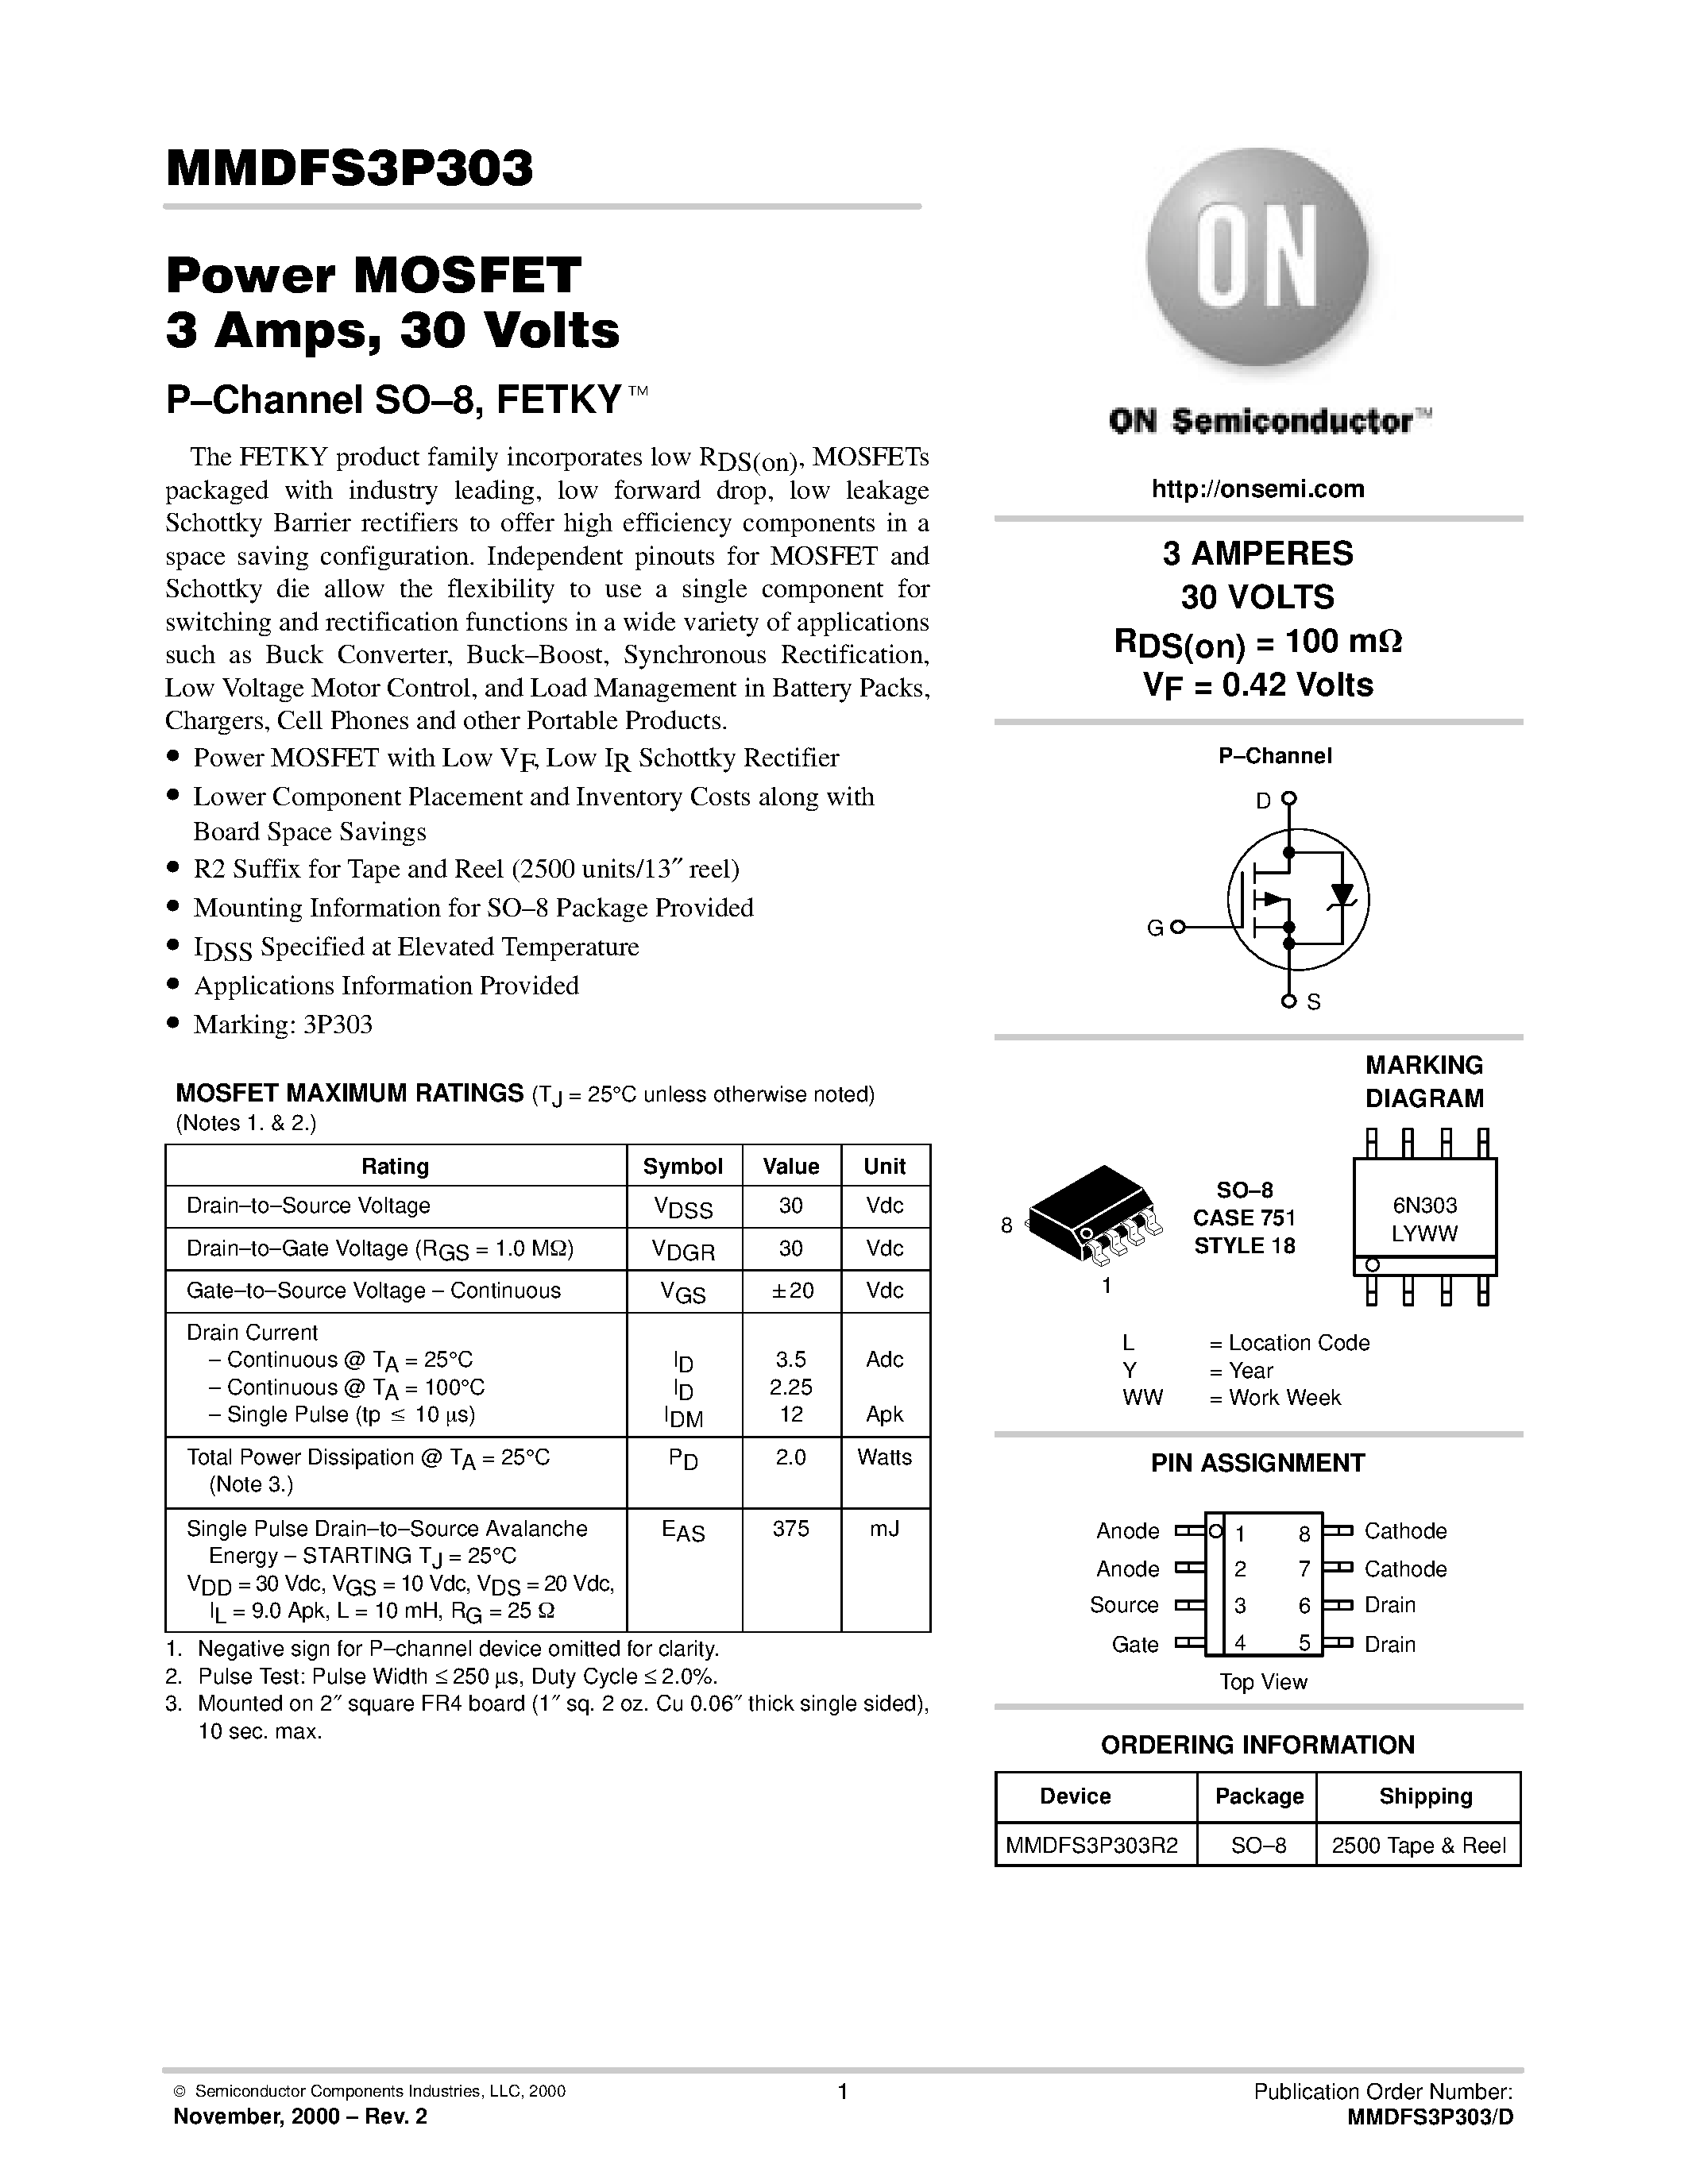 Даташит MMDFS3P303-D - Power MOSFET 3 Amps / 30 Volts страница 1